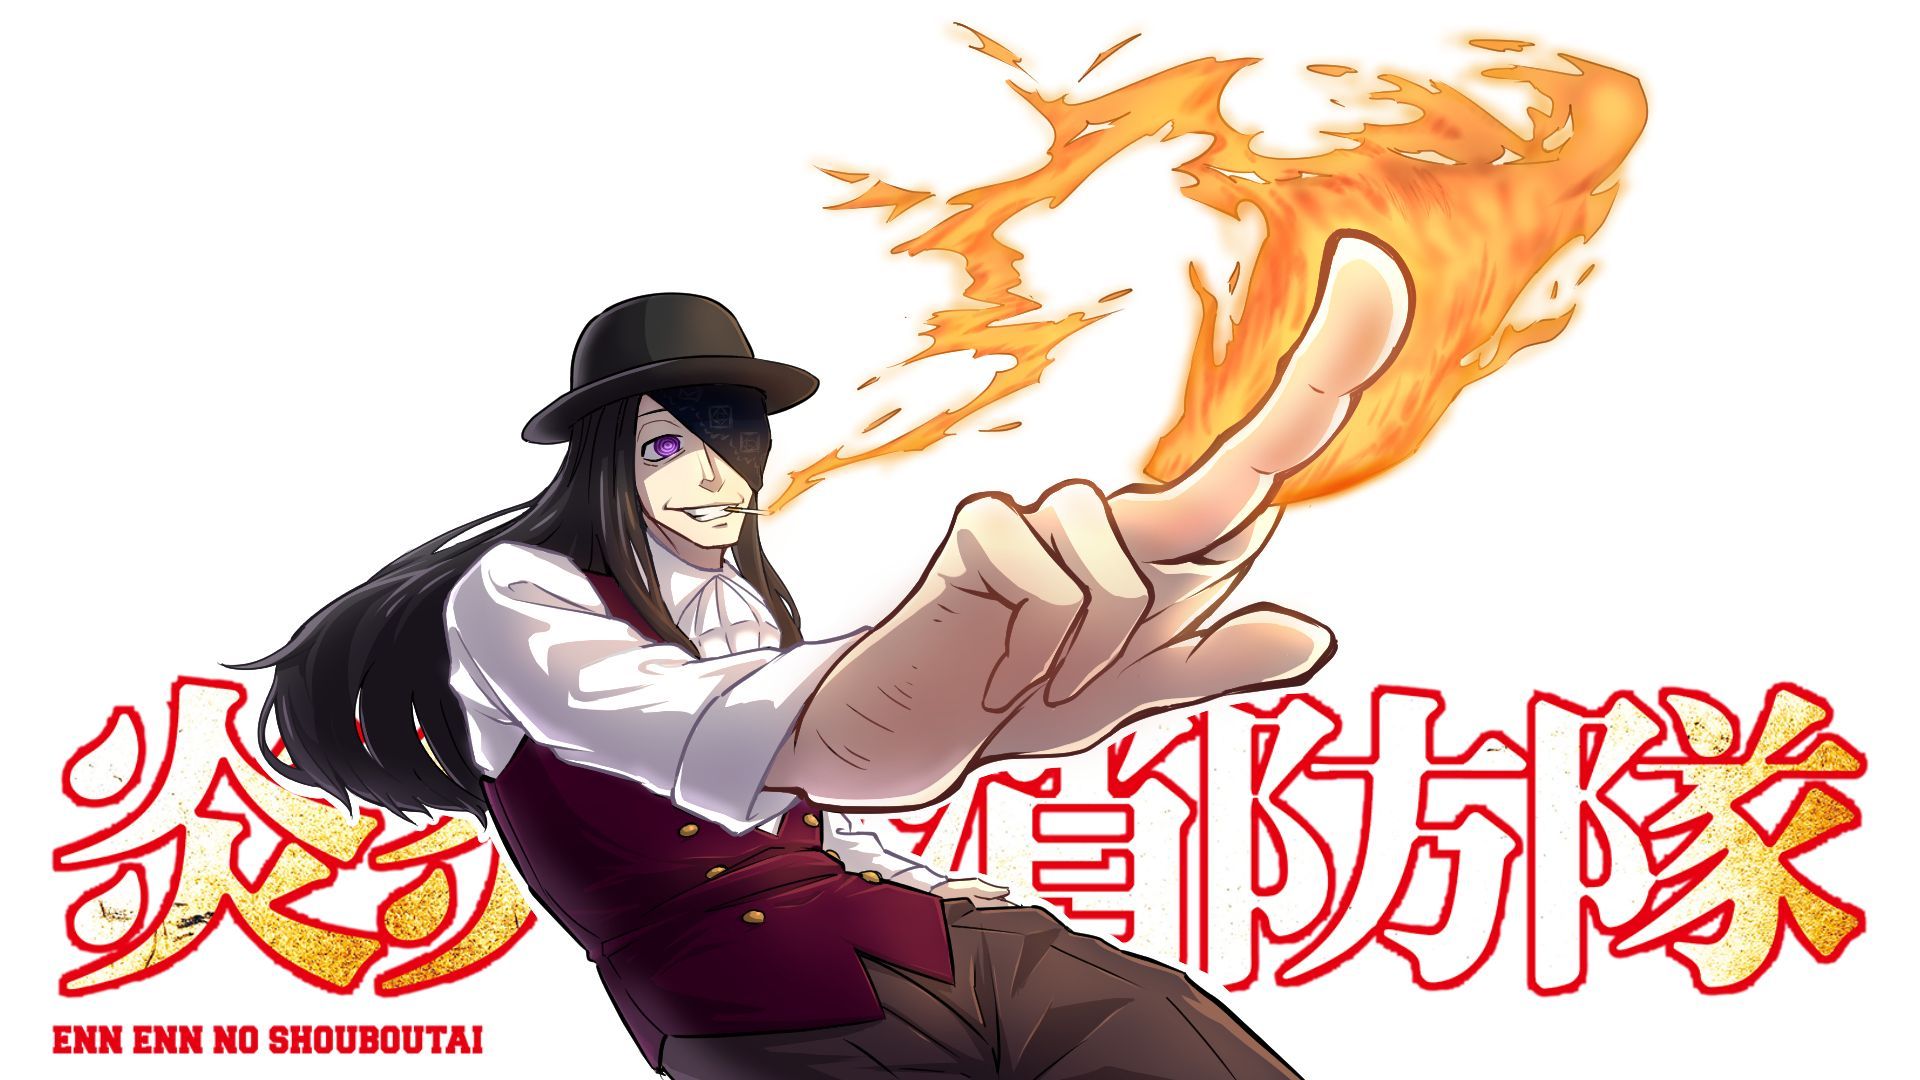 Joker fire force  Anime, Manga, Anime character drawing